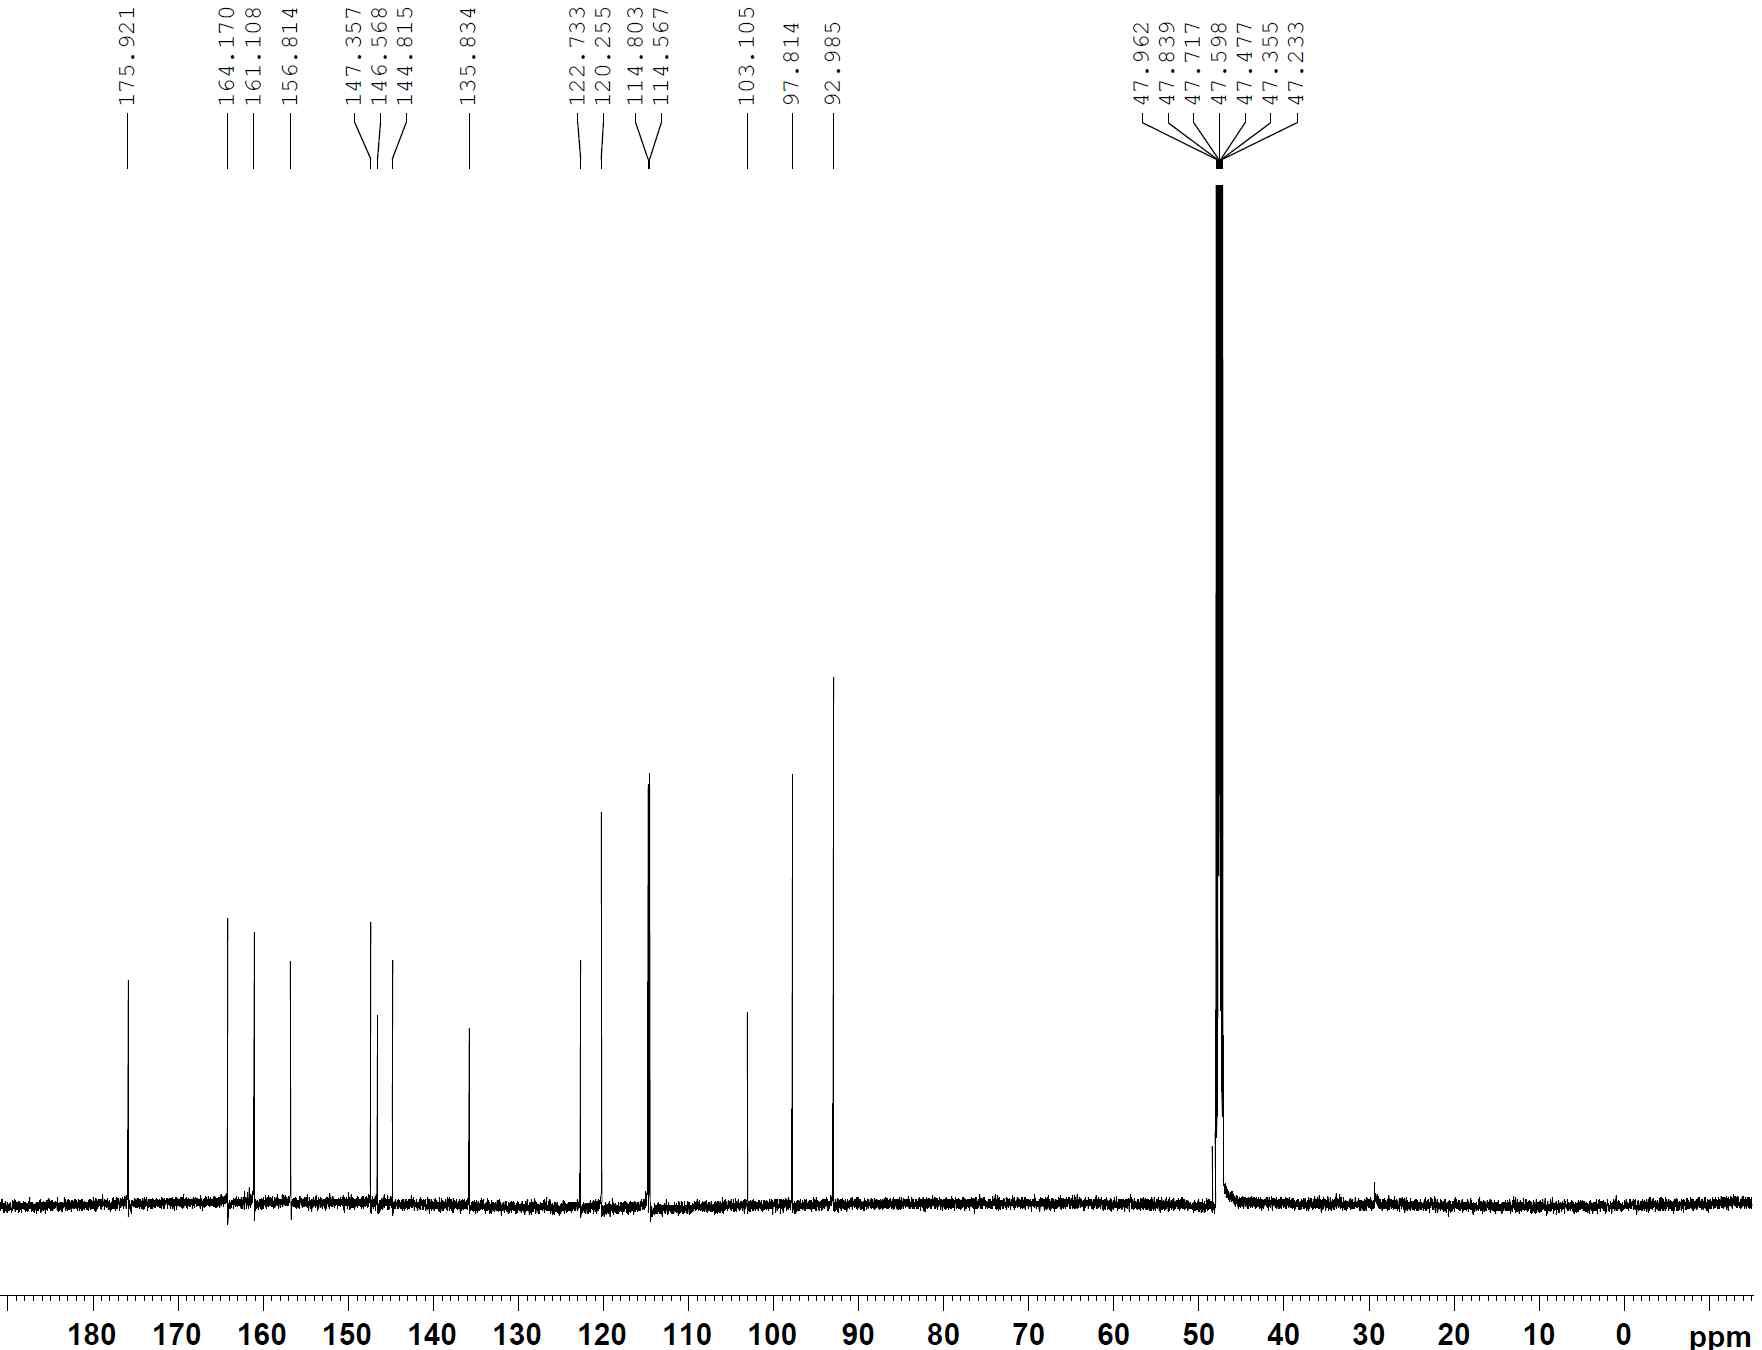 13C-NMR spectrum of compound 12